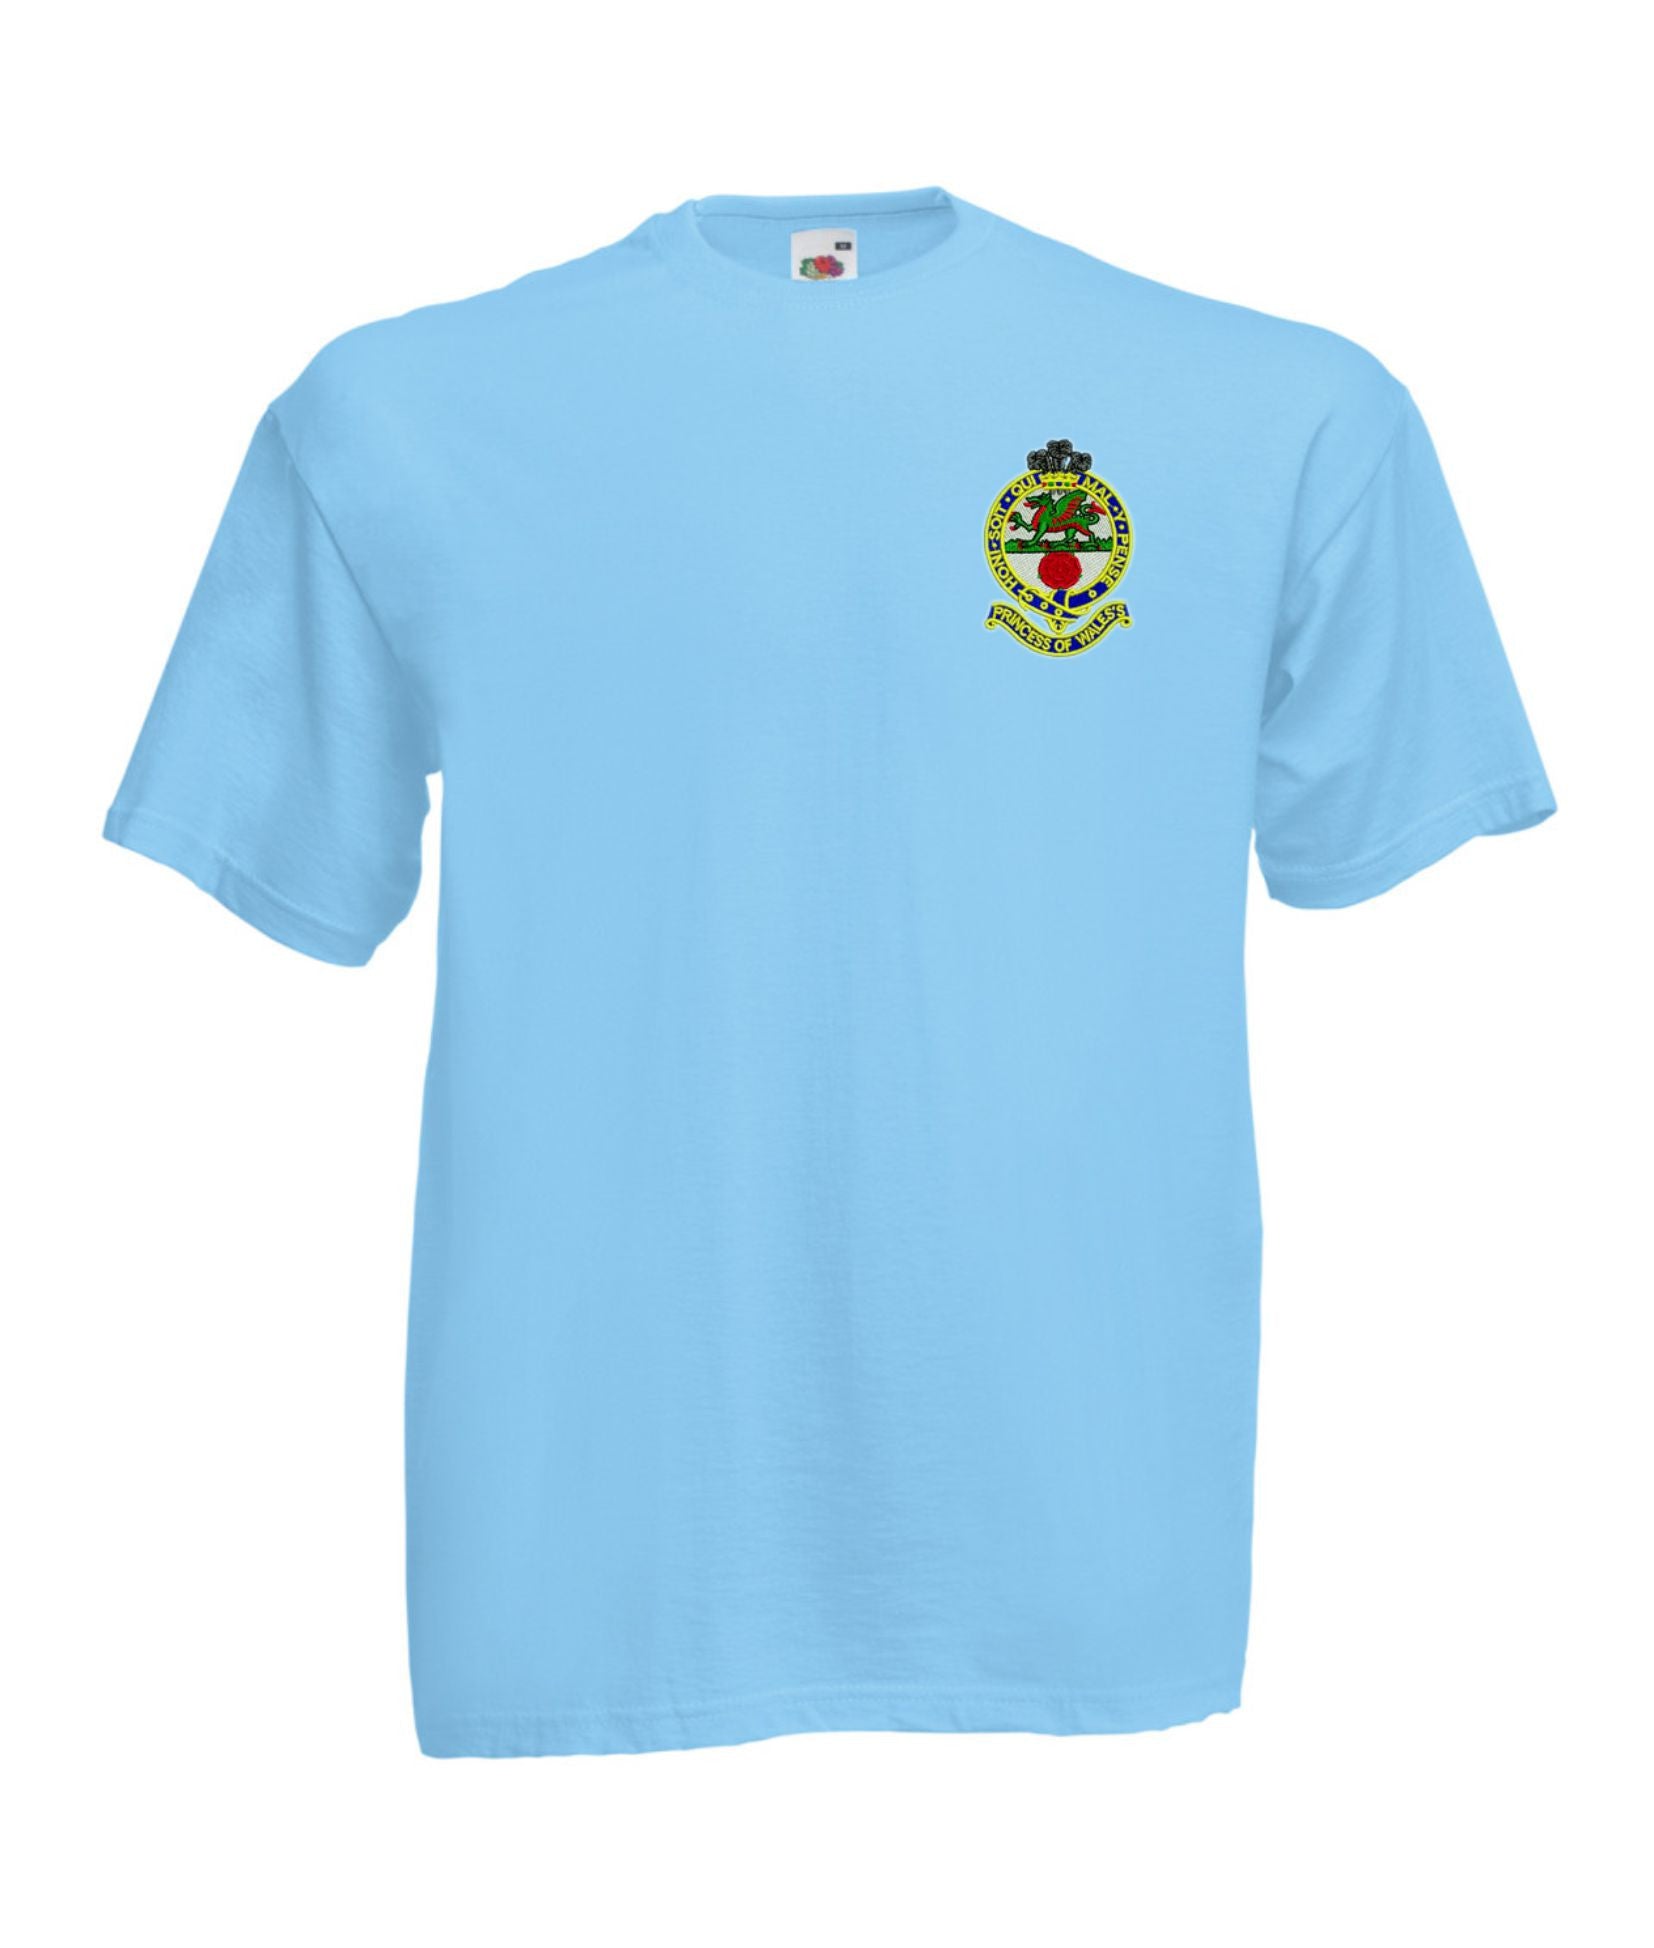 Princess of Wale's Royal Regiment T Shirts